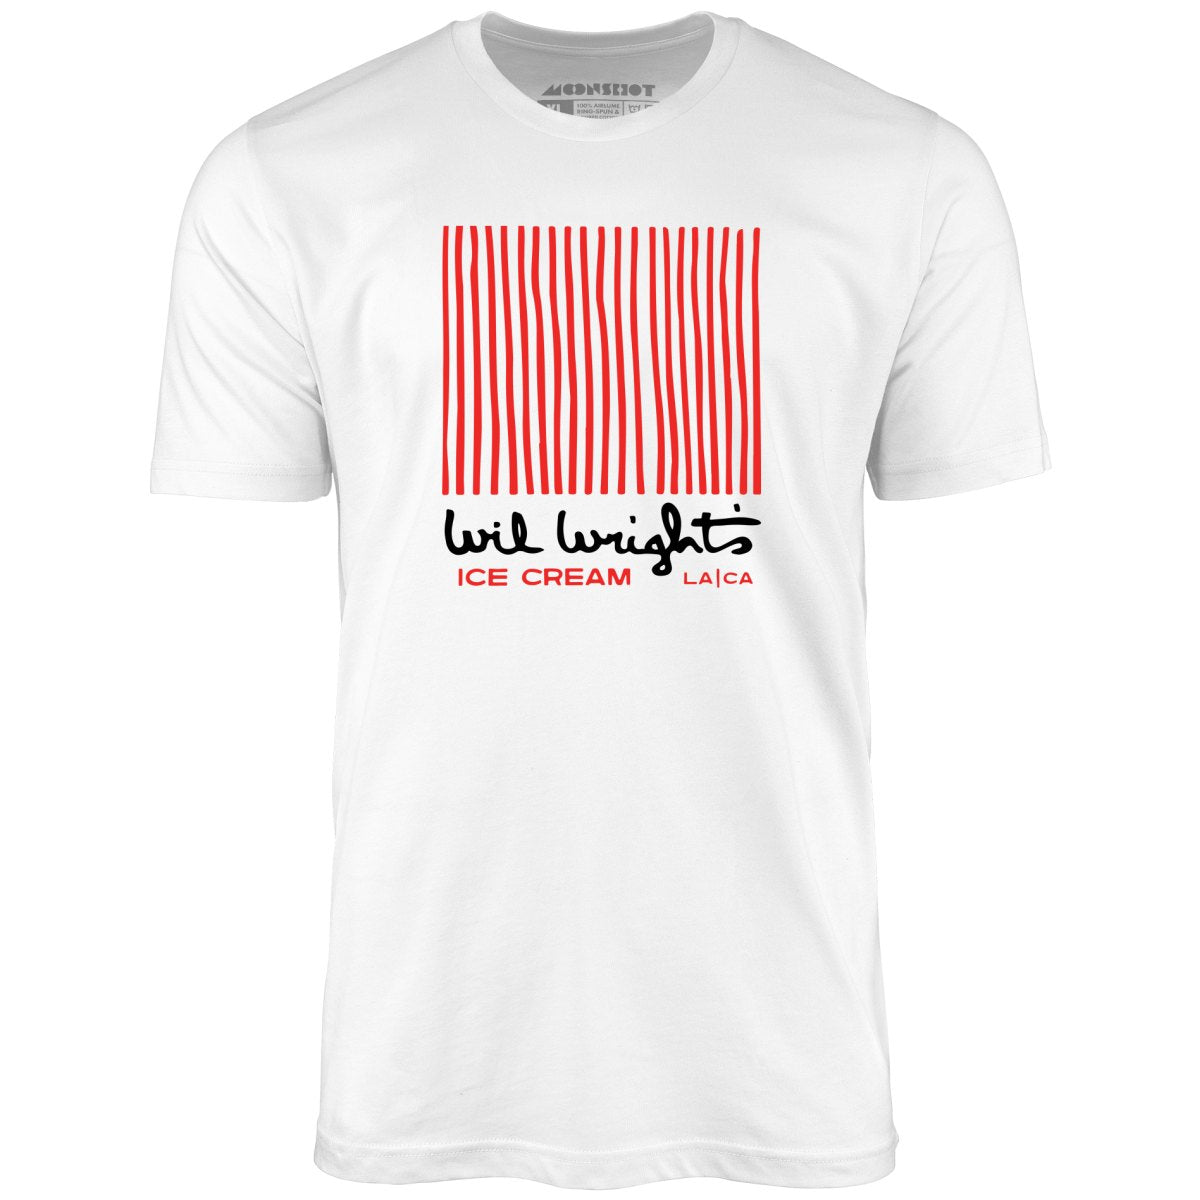 Wil Wright's Ice Cream - Los Angeles, CA - Vintage Ice Cream Parlor - Unisex T-Shirt